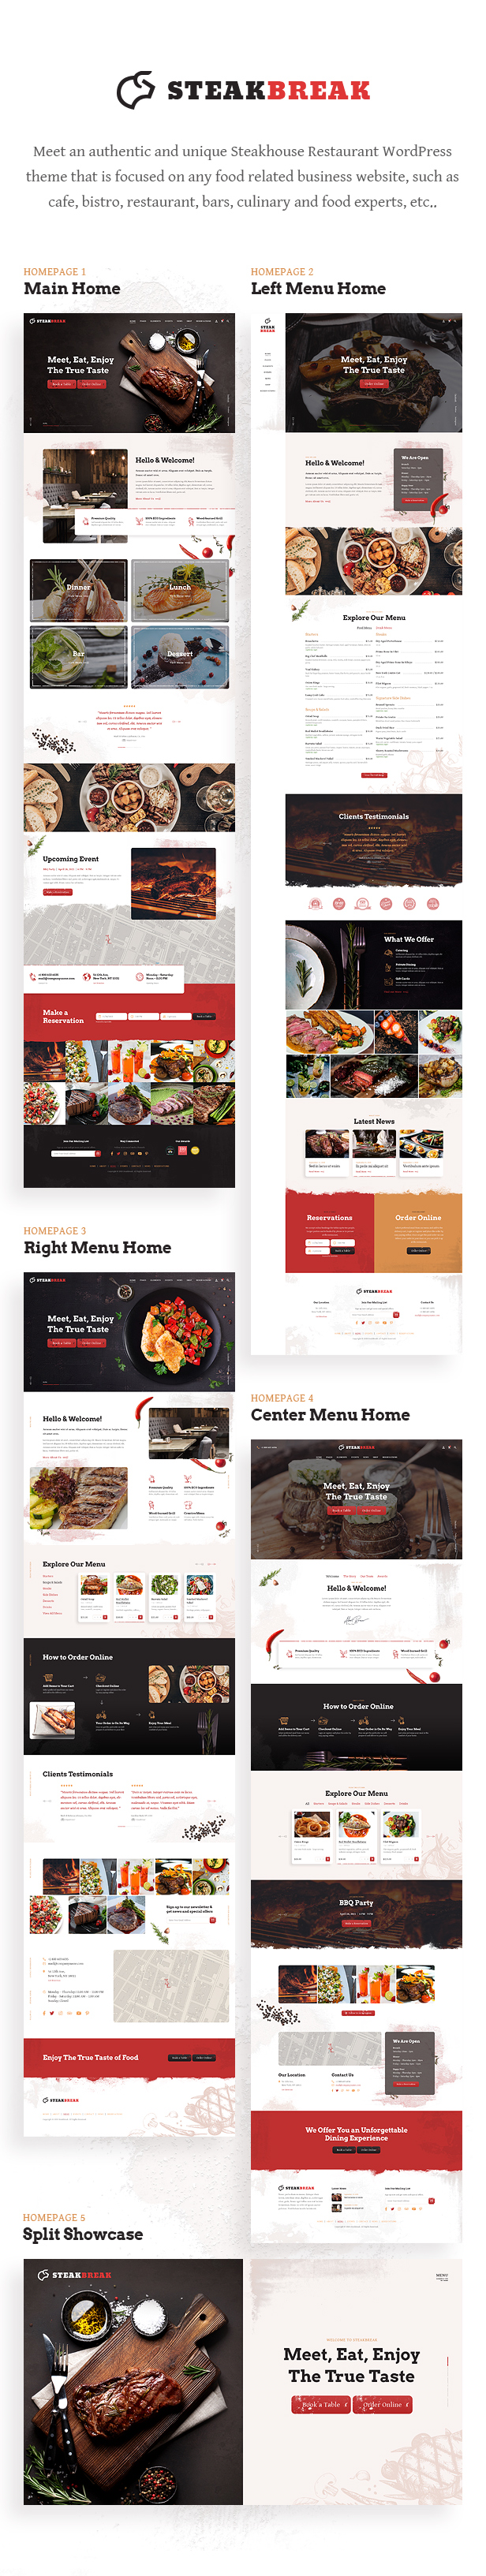 SteakBreak - Meat Restaurant WordPress Theme - 1